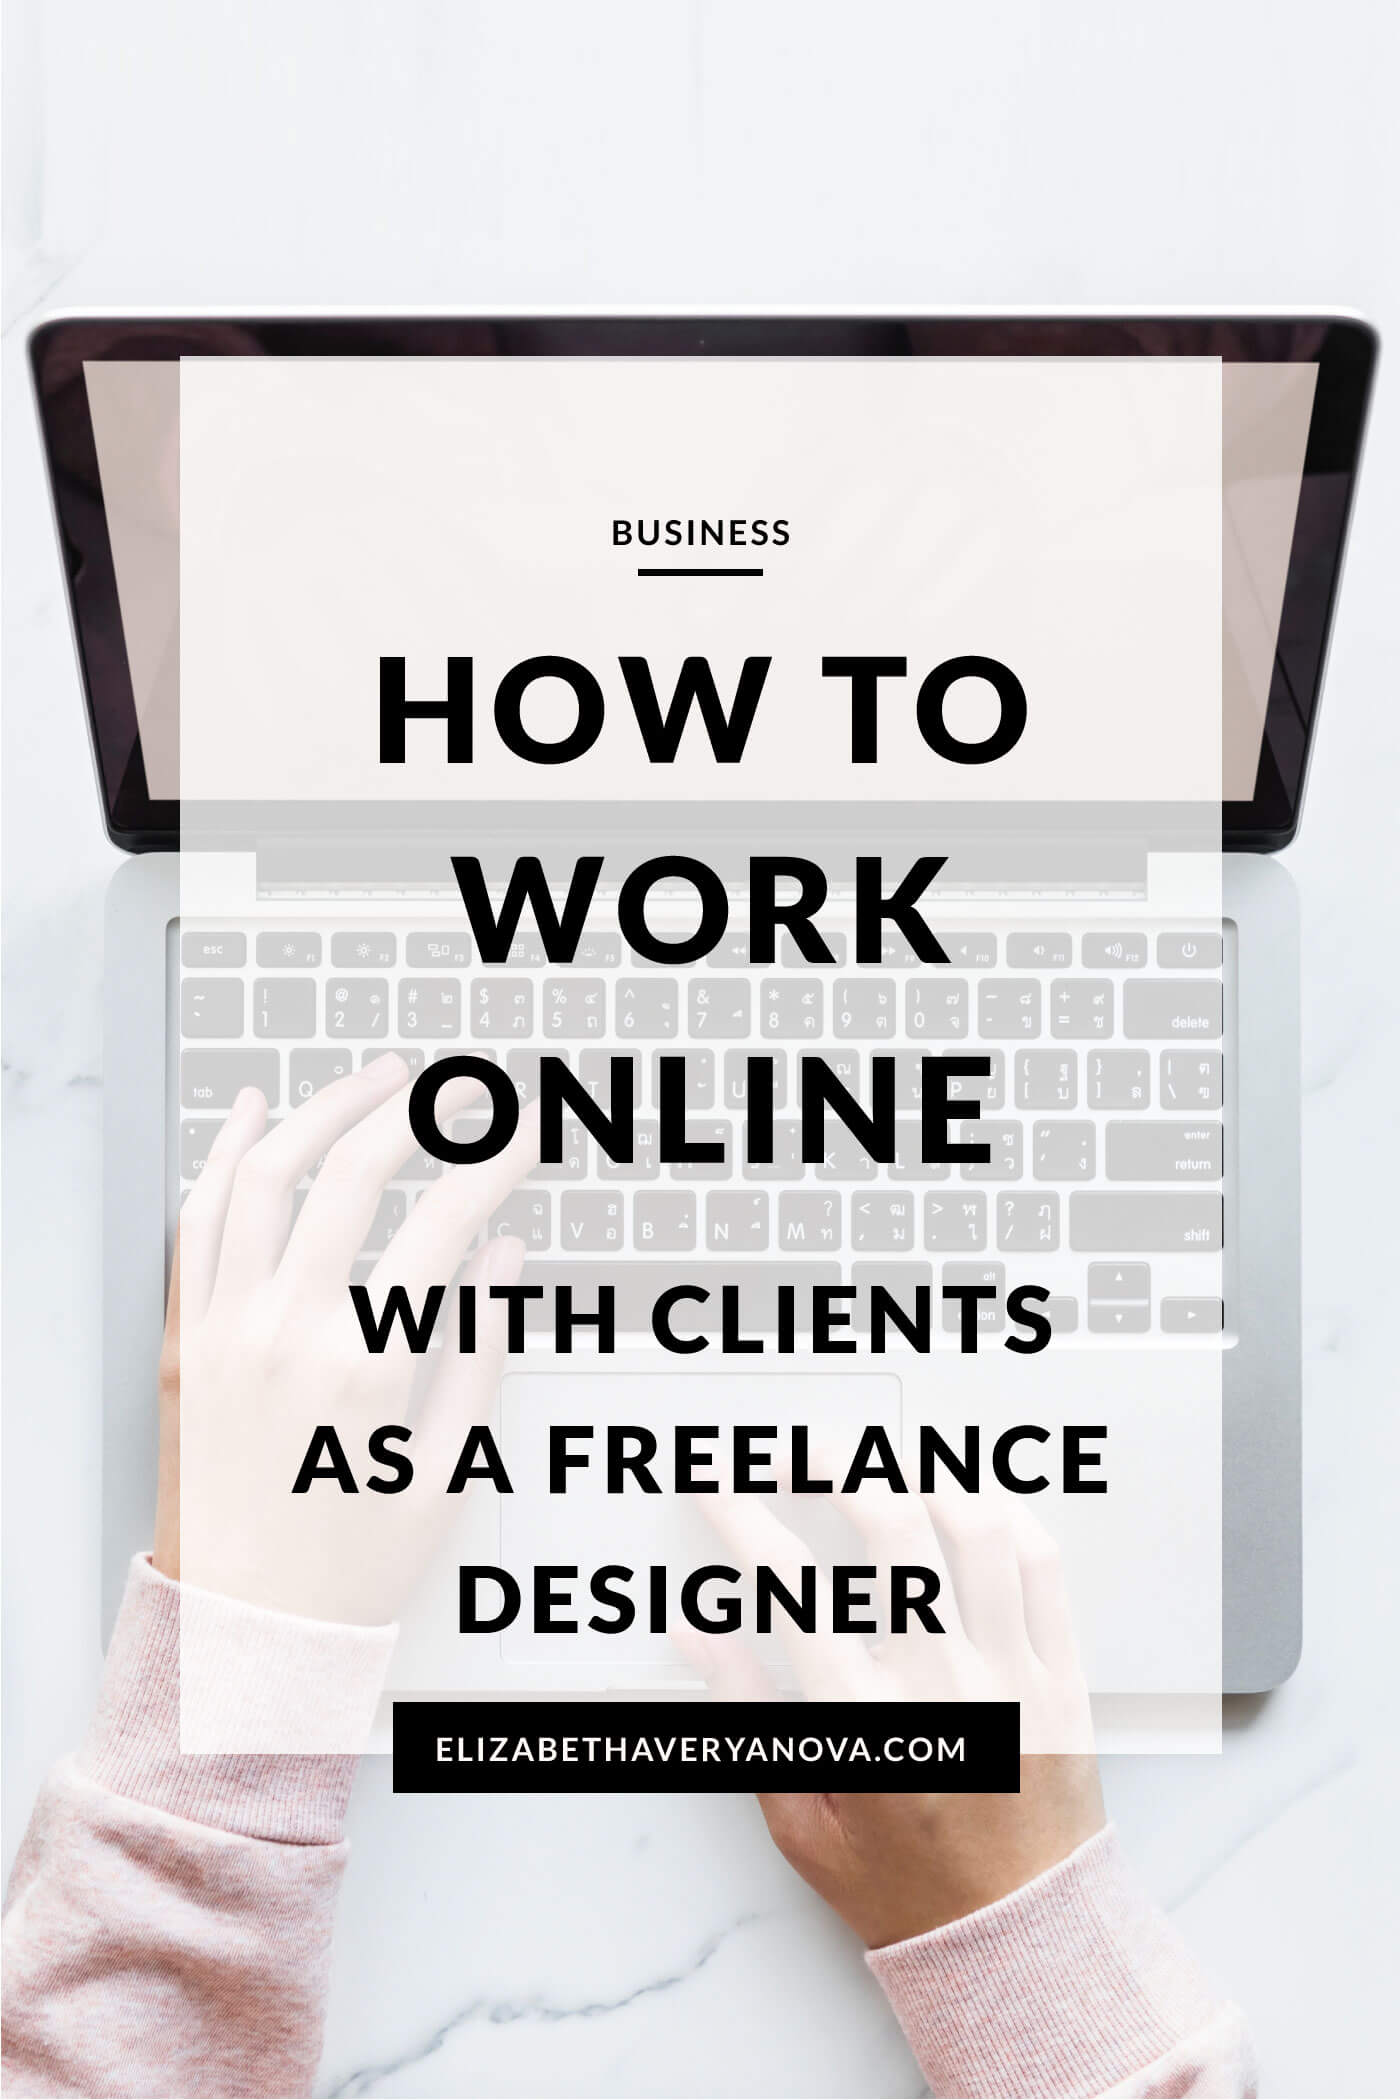 How-To-Work-Online-With-Clients-As-A-Freelance-Designer-Elizabeth-Averyanova-Blog